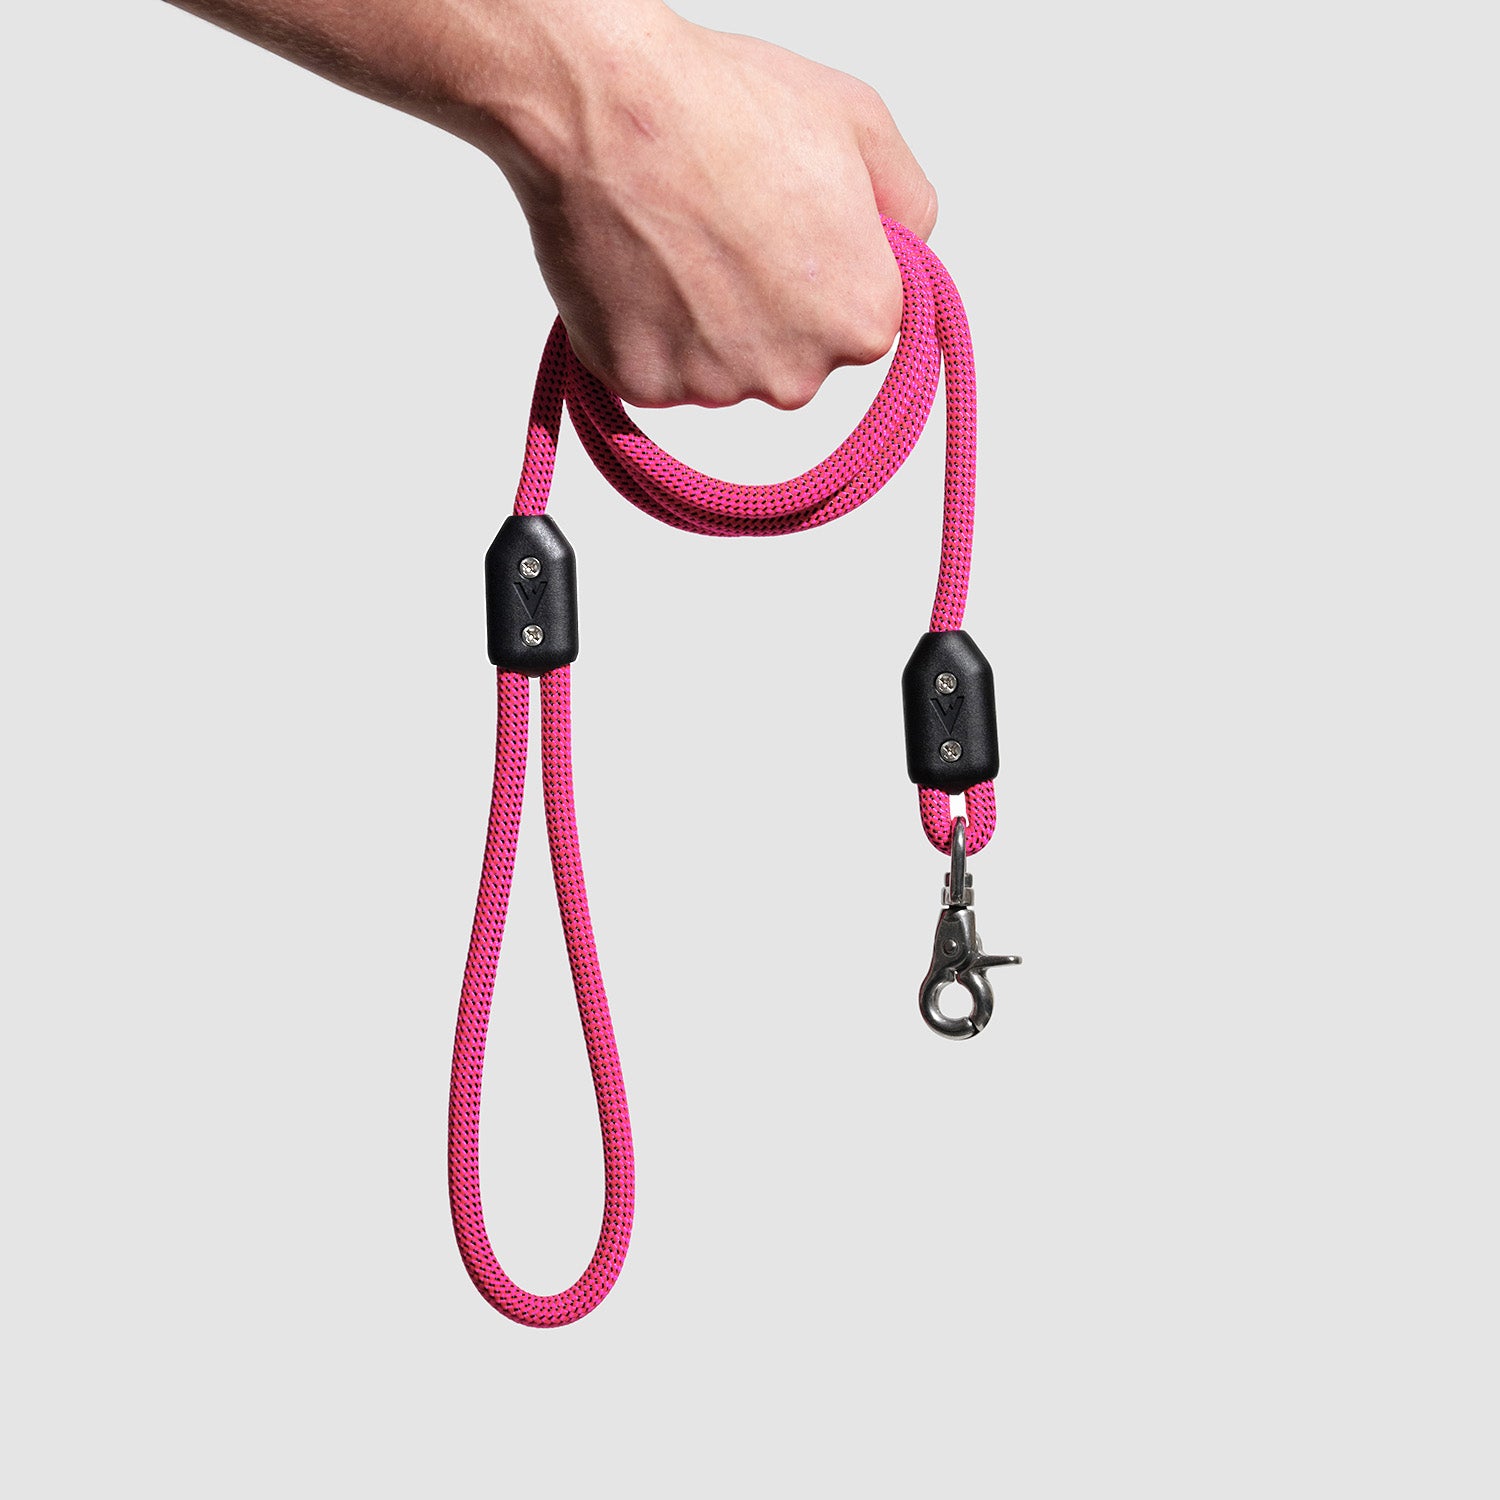 atlas pet company lifetime leash climbing rope lifetime warranty dog leash --pink